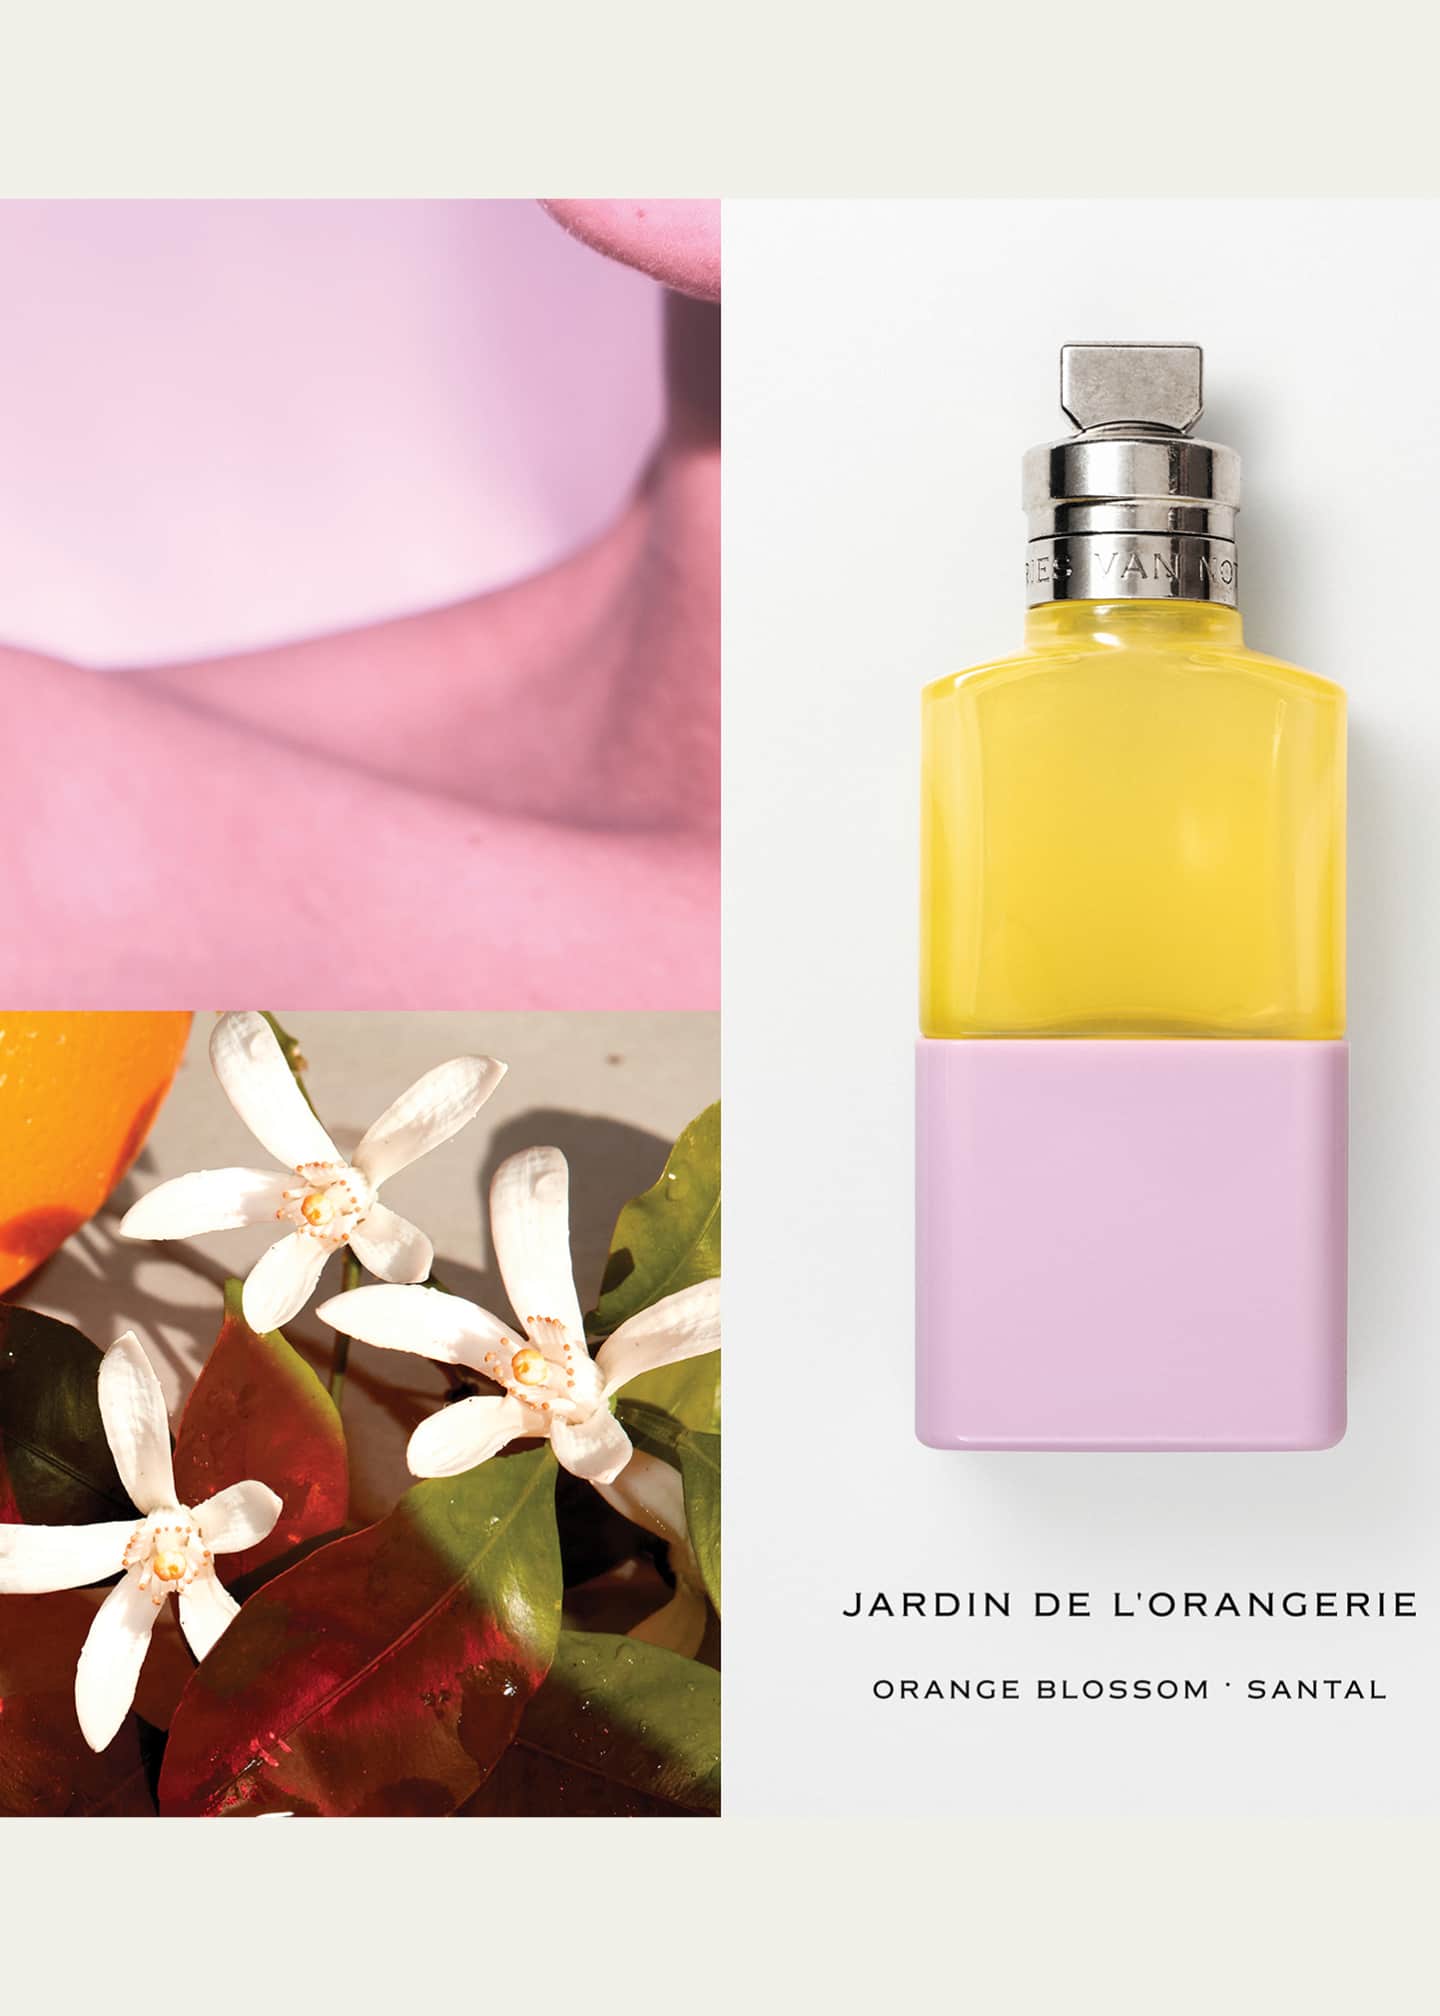 Dries Van Noten Jardin de l'Orangerie Eau de Parfum, 3.4 oz 